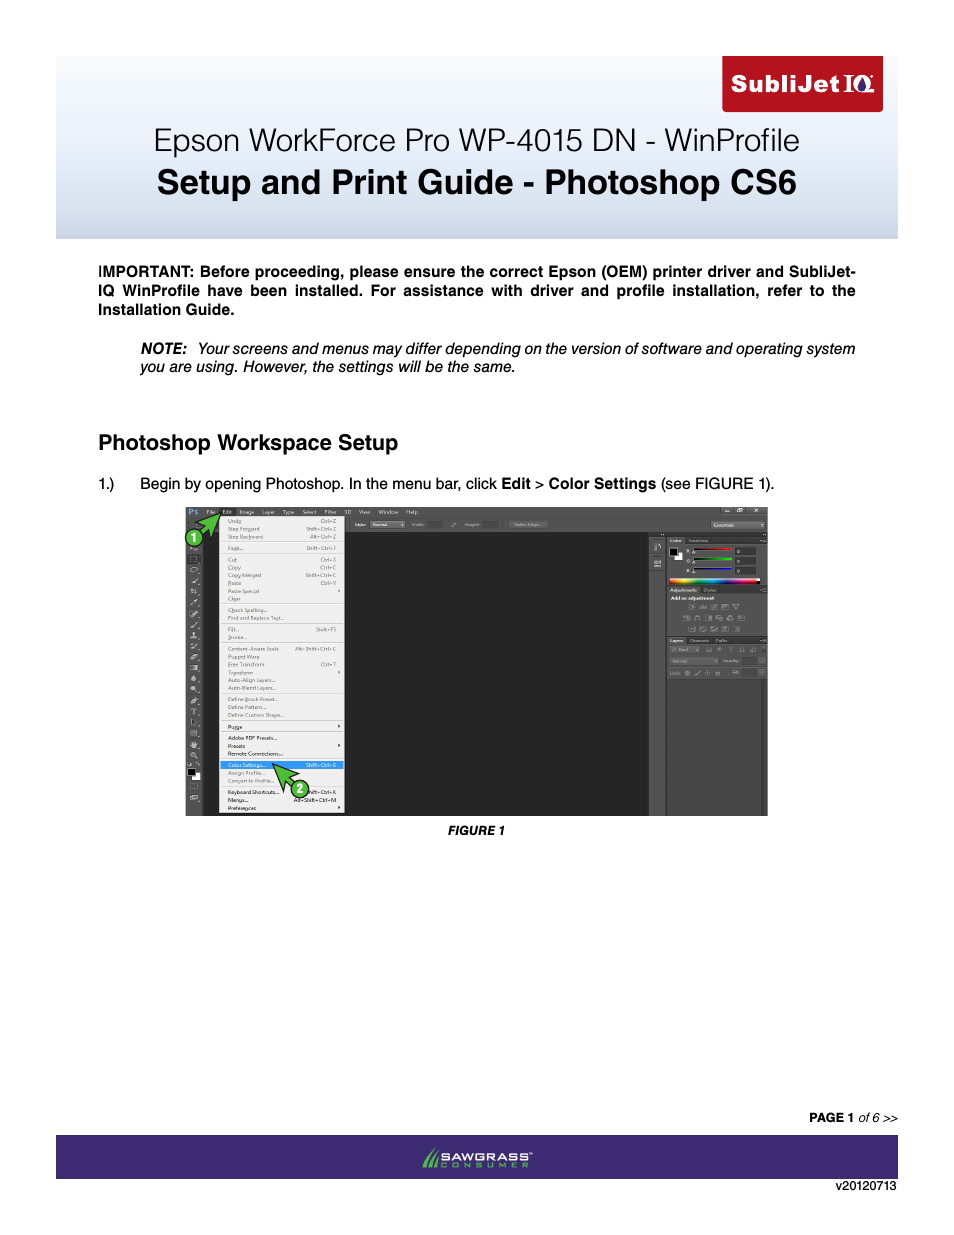 SubliJet IQ Epson WP-4015 (Windows ICC Profile Setup): Print & Setup Guide Adobe Photoshop CS6